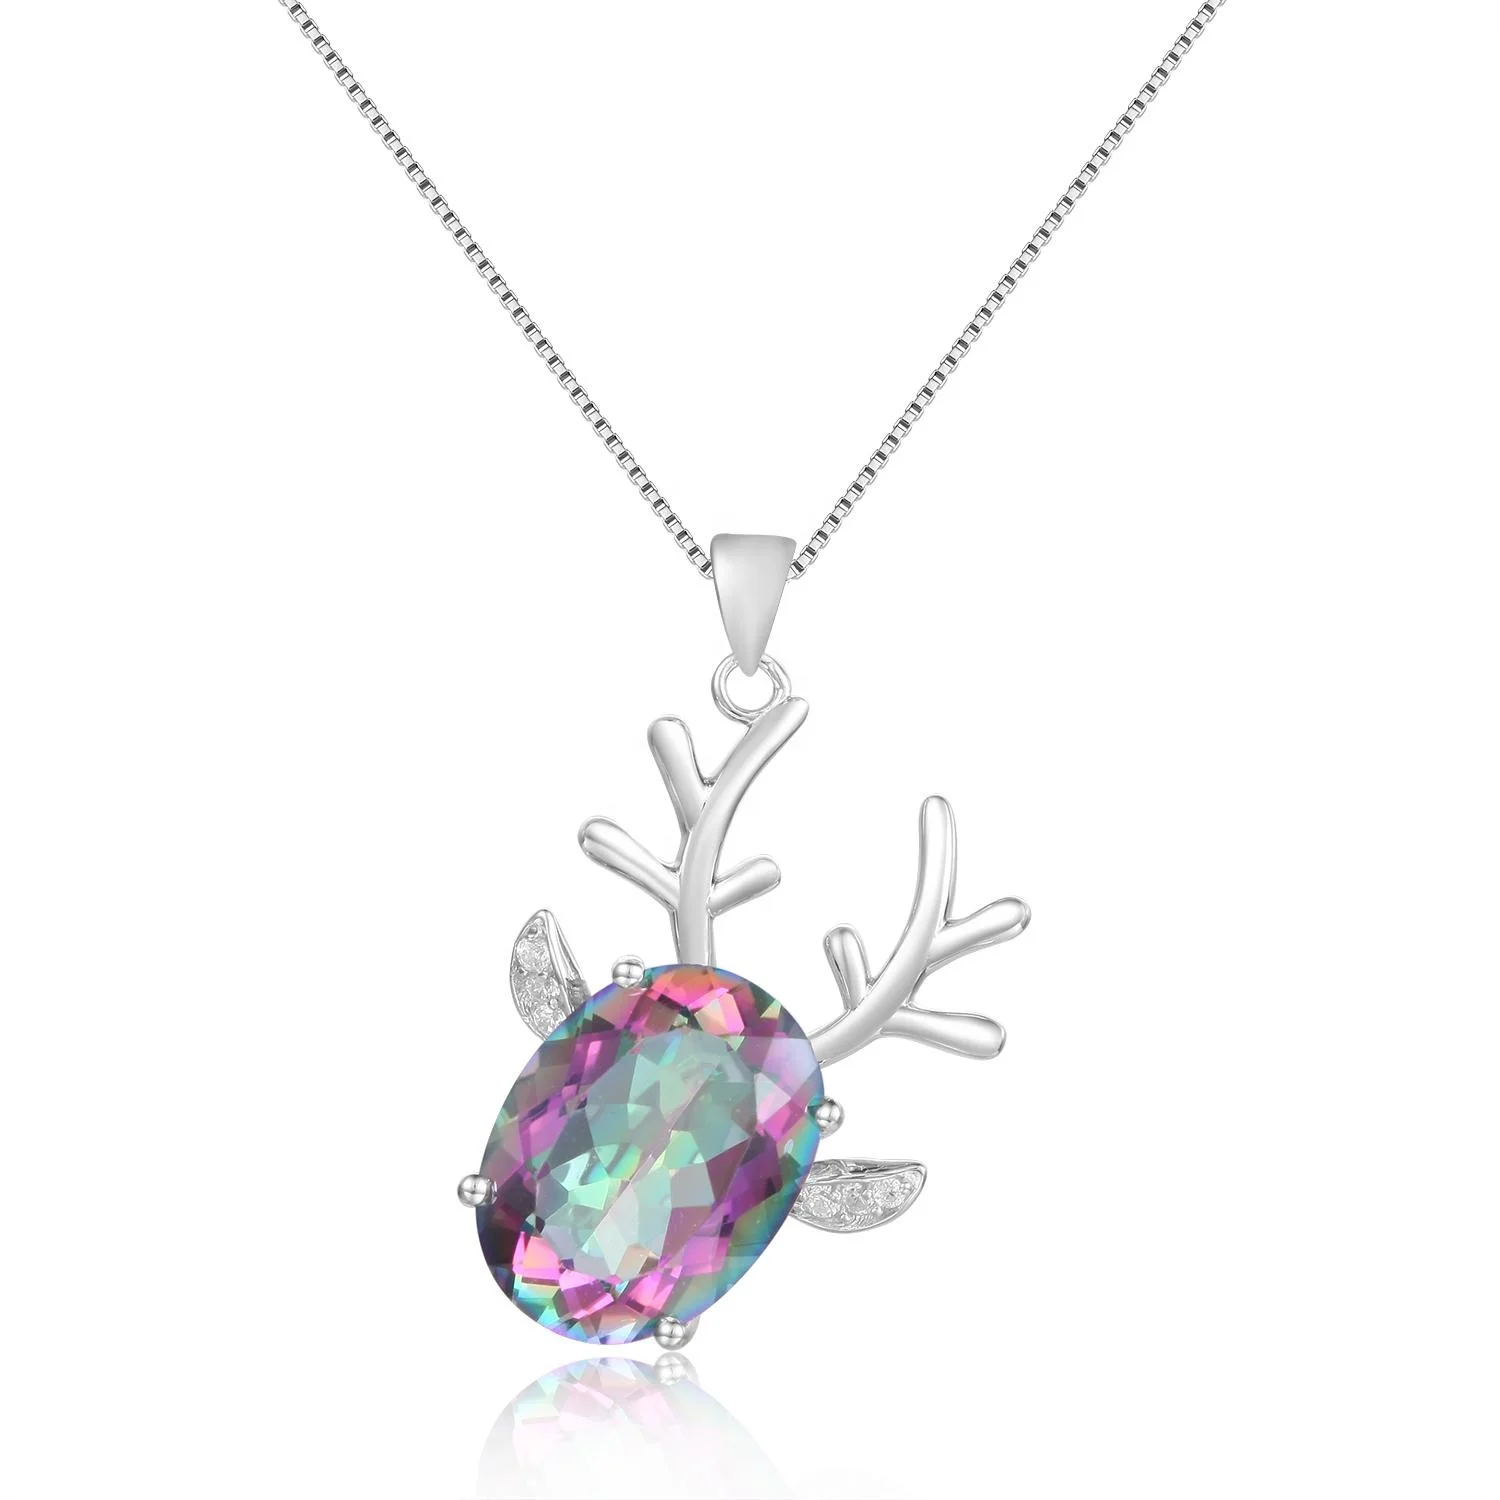 

Abiding Natural 12X16 Mystic Quartz-Rainbow Gemstone Jewelry Animal Deer 925 Sterling Silver Fashion Pendant Necklace Women